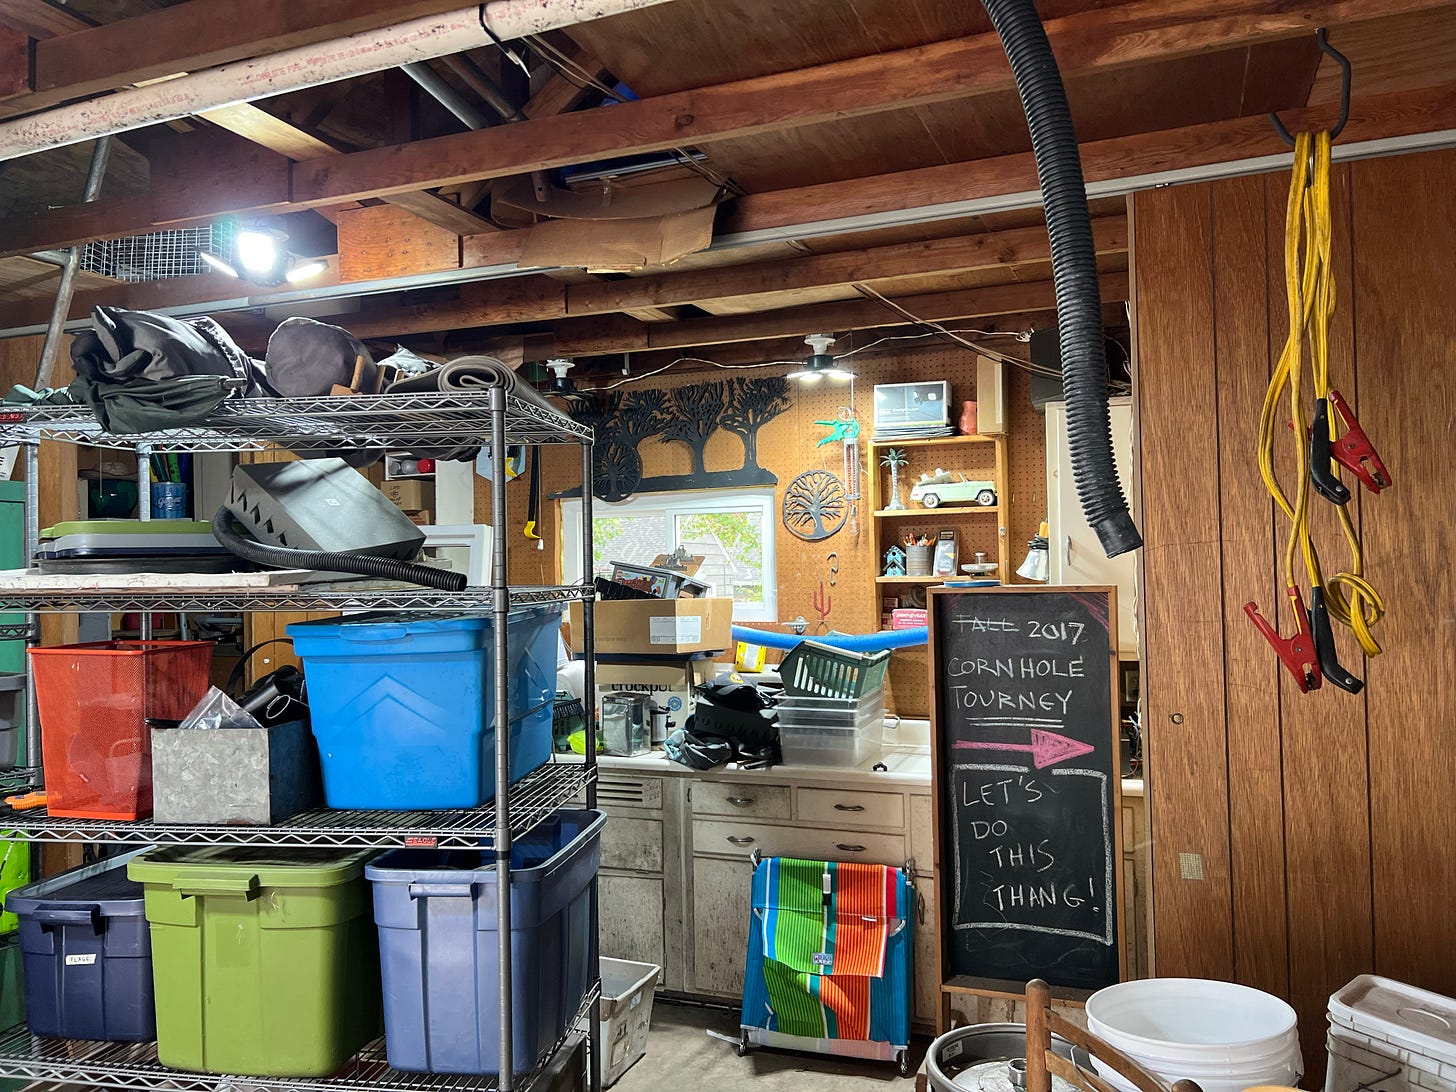 Image of paneled garage filled with bins, shelves, jumper cables and all manner of garage junk